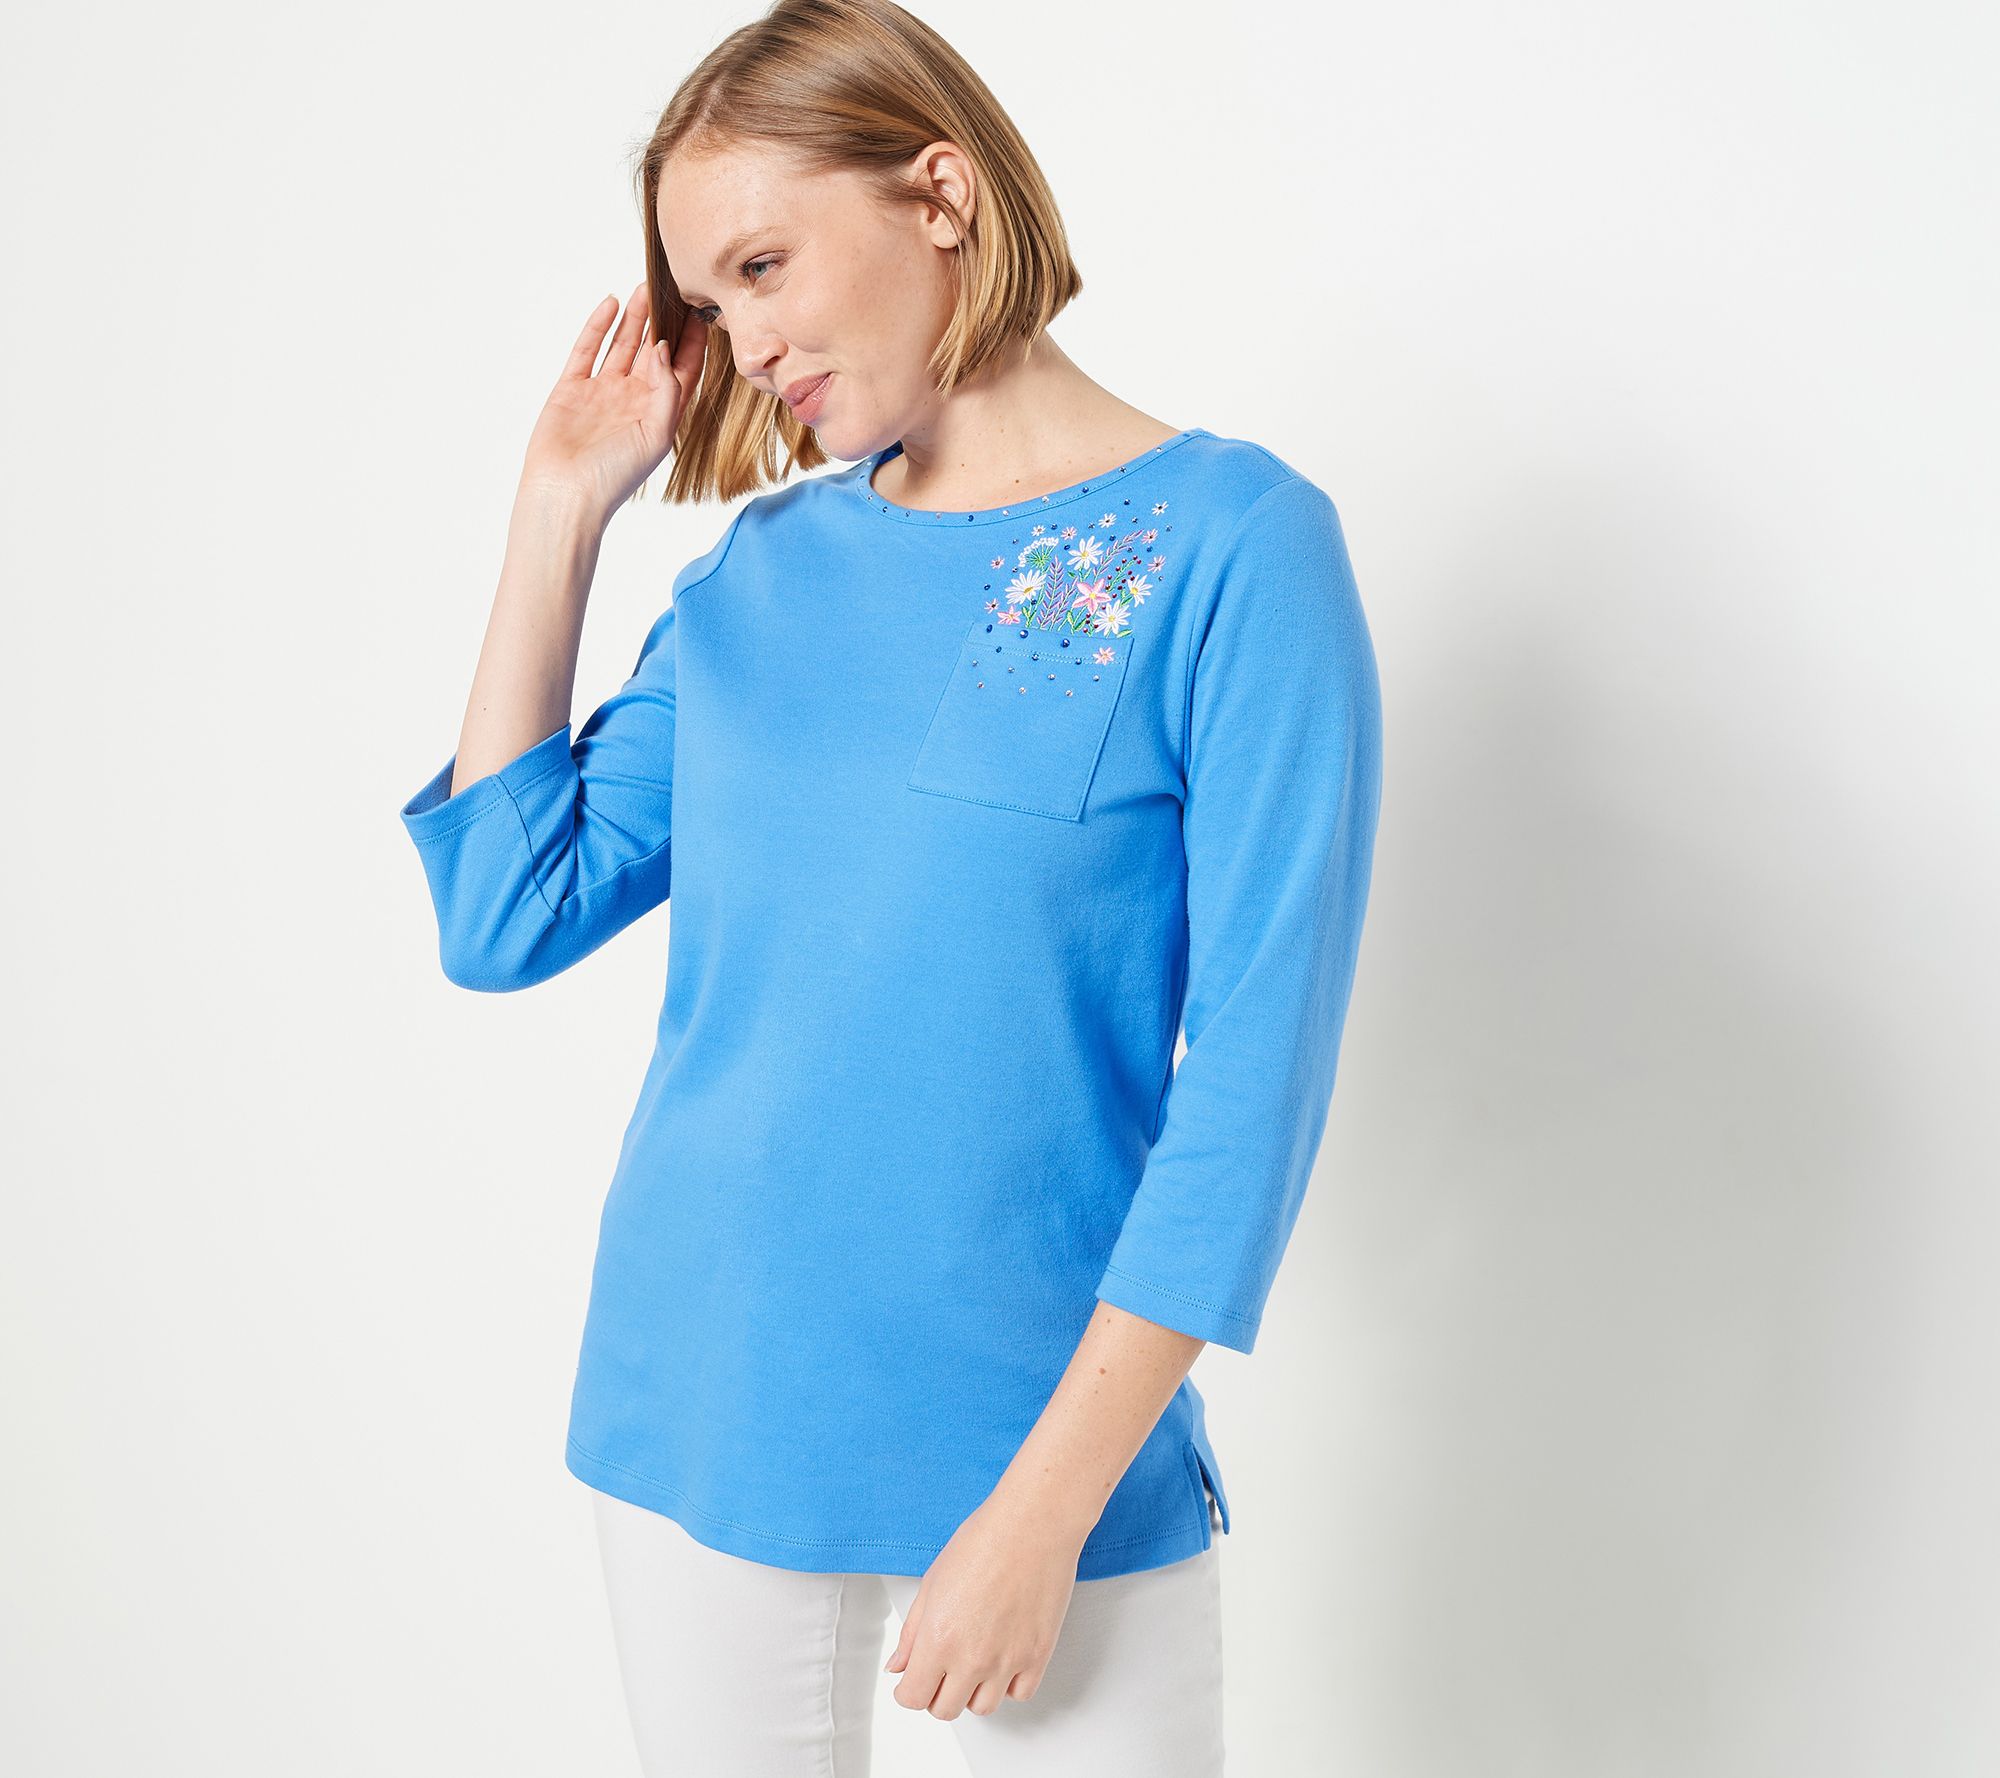 Quacker Factory Shirt Plus Size 3X Navy blue Rhinestones Polka Dot Top  Blouse